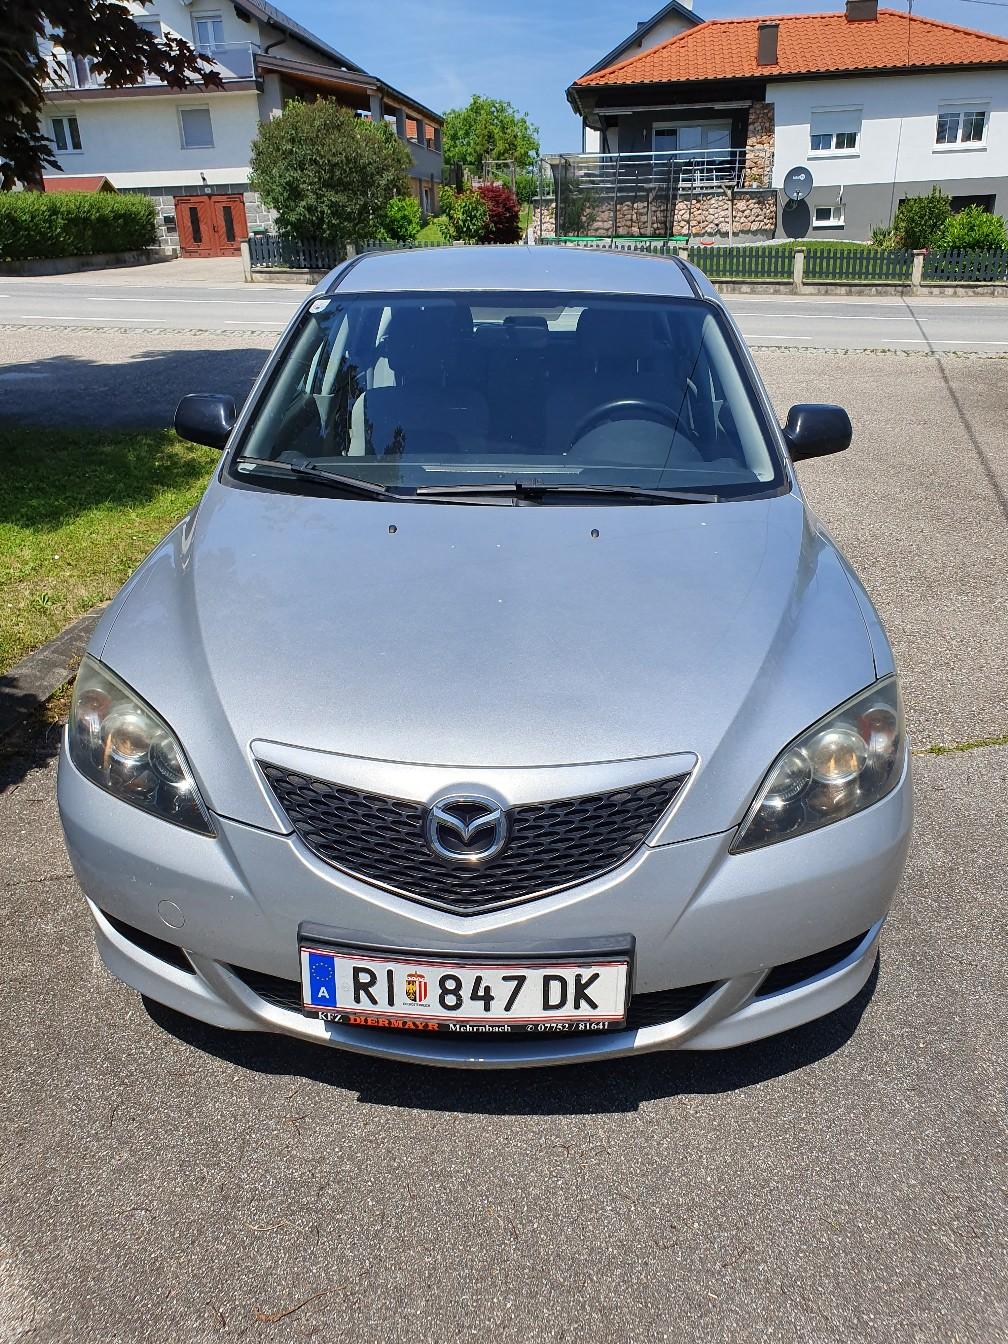 Mazda 3 1,4i CE BJ 2006 in 4941 Ried im Innkreis für € 2